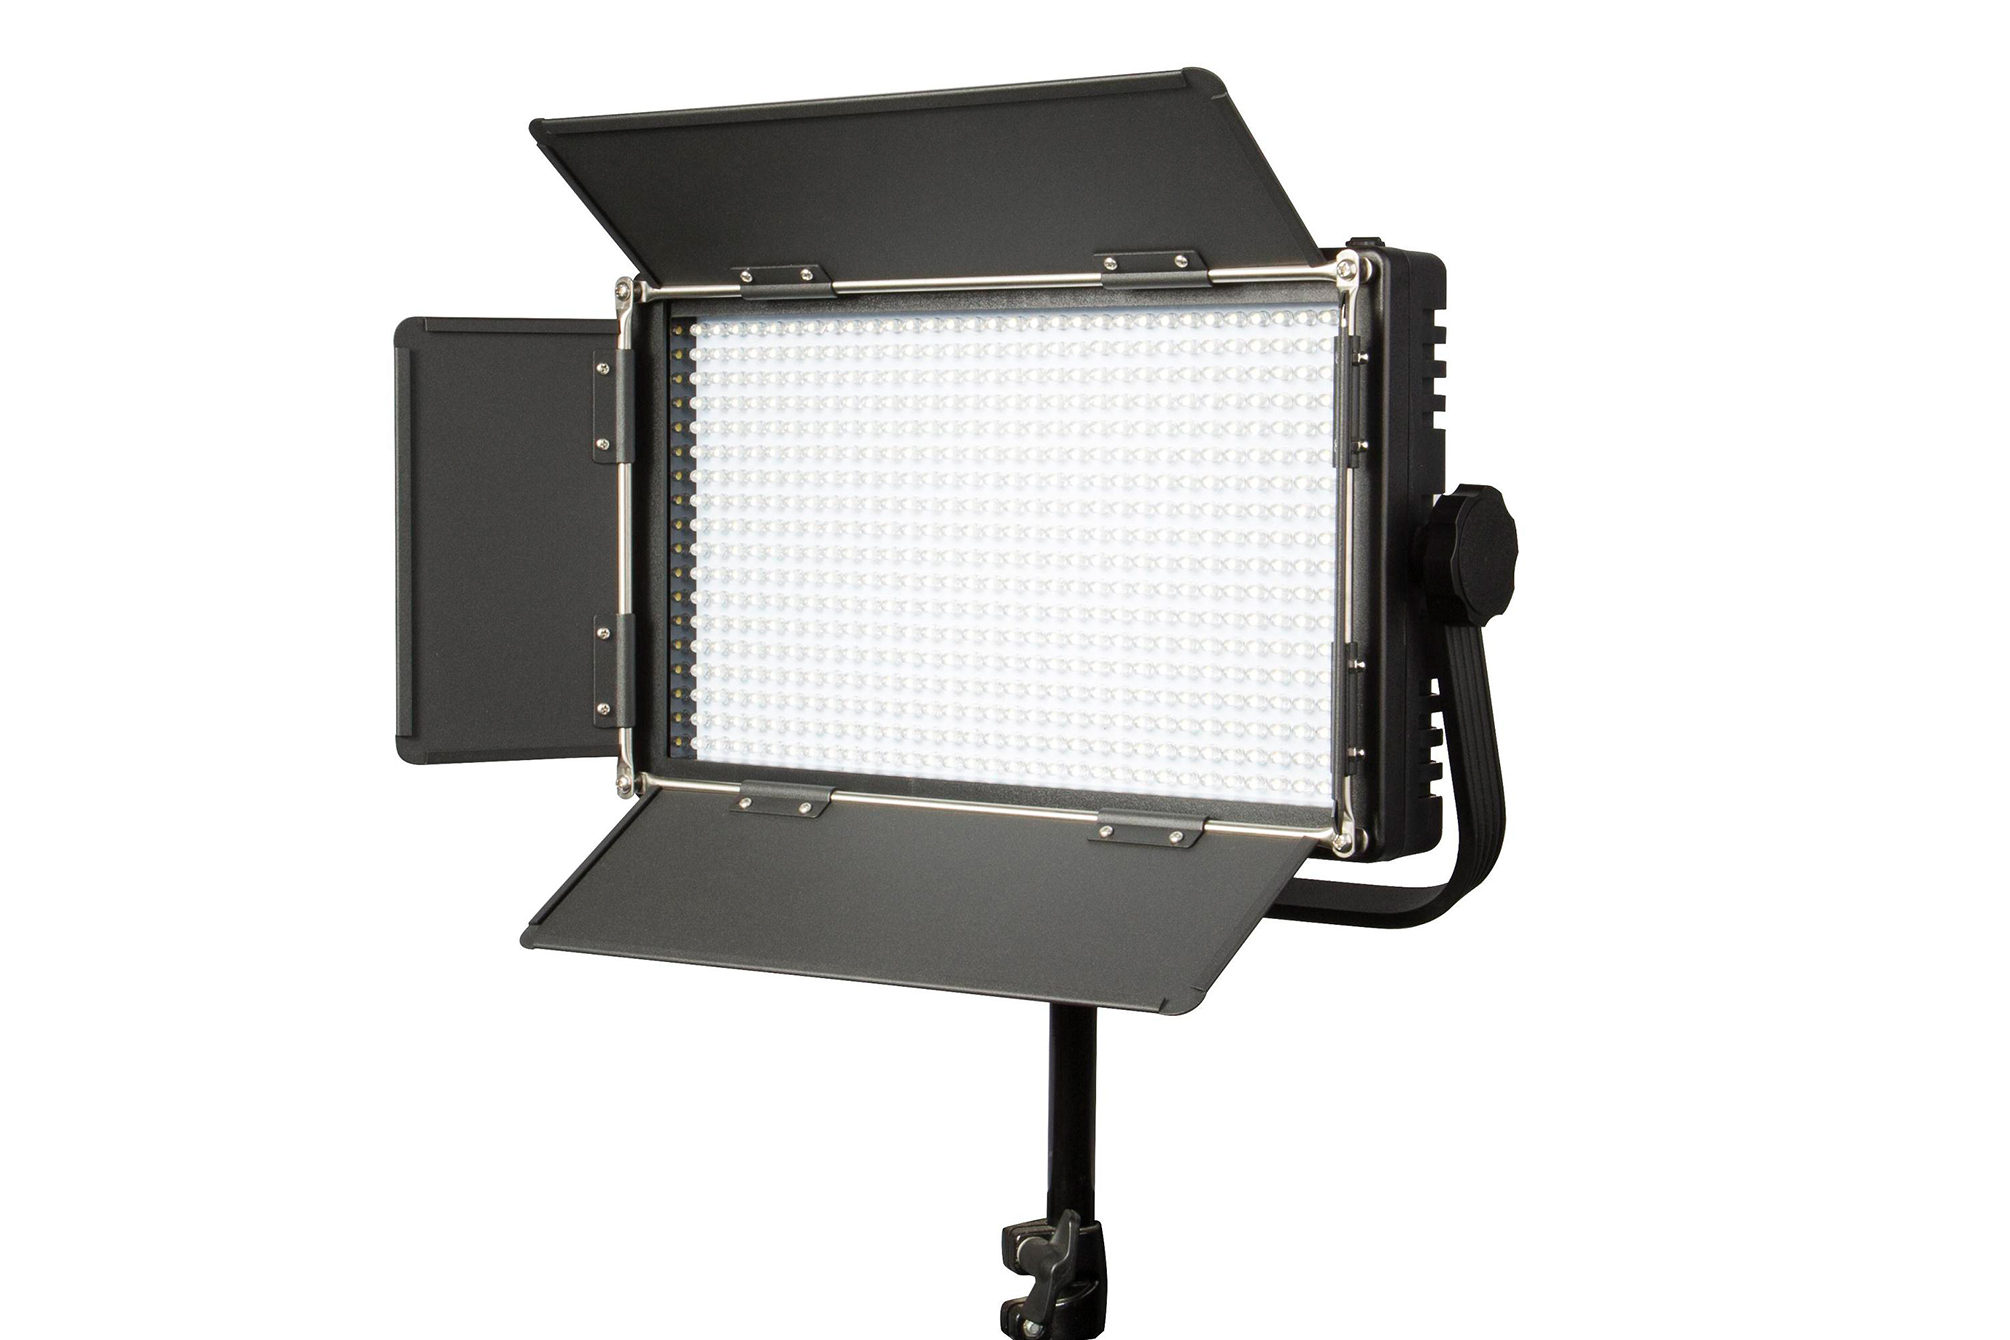 Swit S-2110DA, 576-LED Daylight Panel LED Light